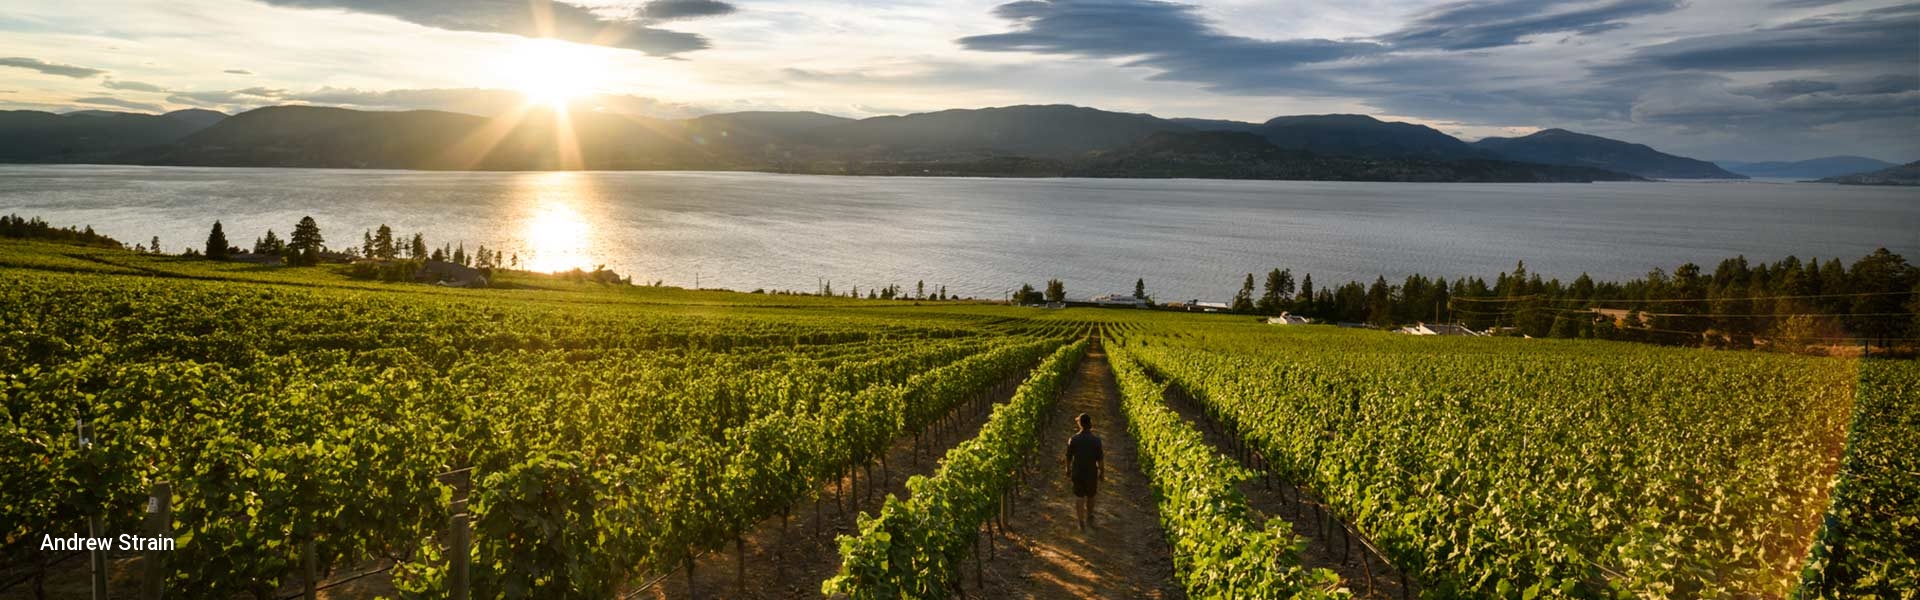 Vineyards in the Okanagan Wine Region